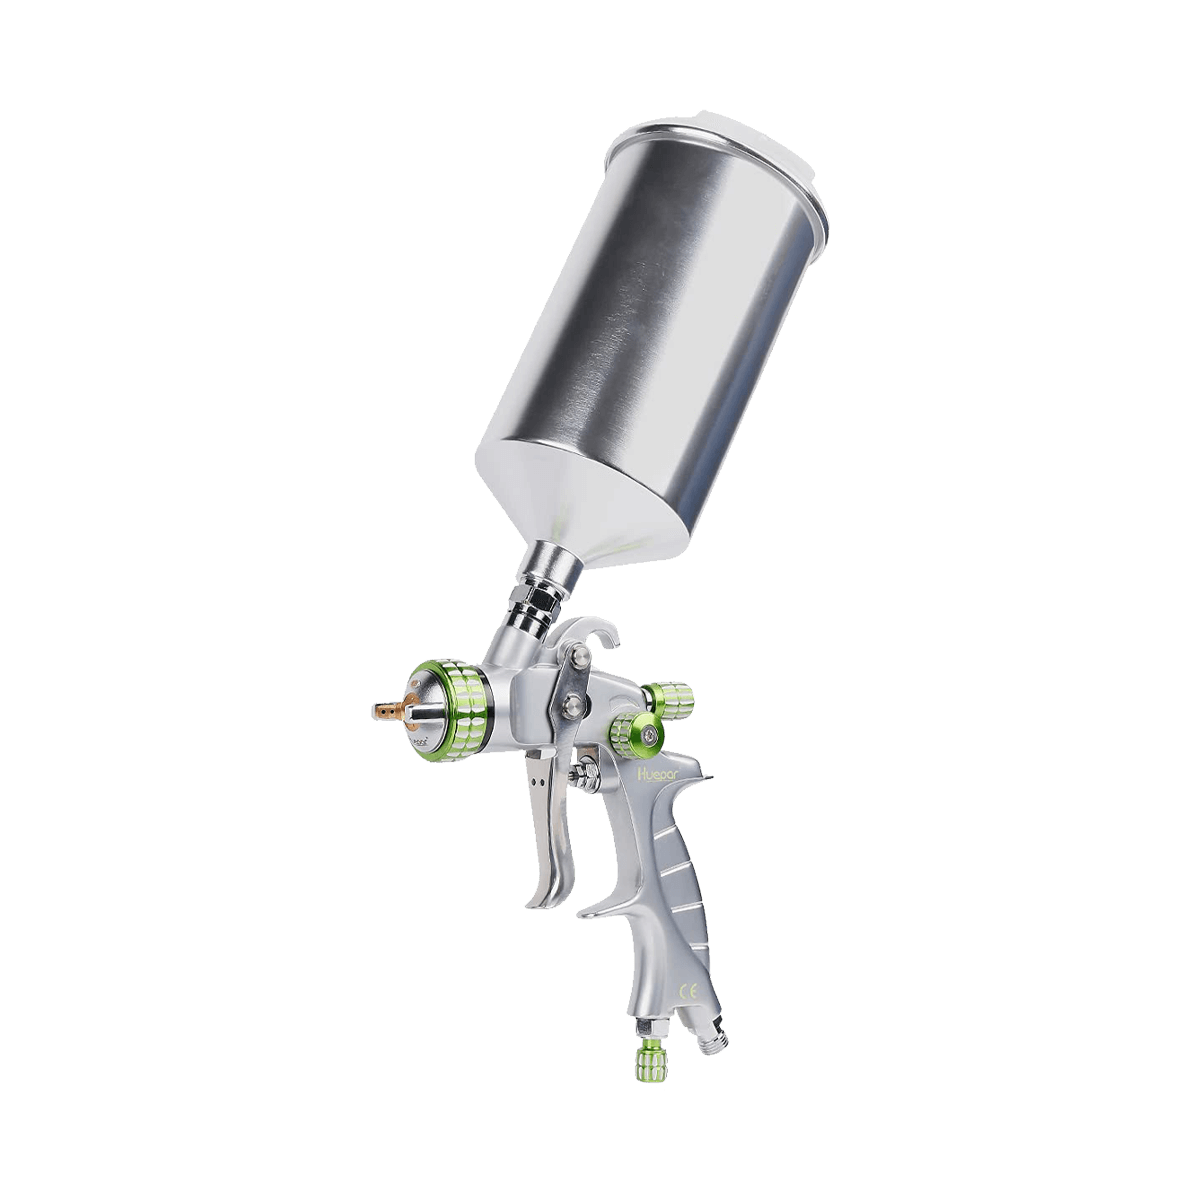 HUEPAR SG240T - HVLP Gravity Feed Air Spray Gun HUEPAR EU - Laser Level